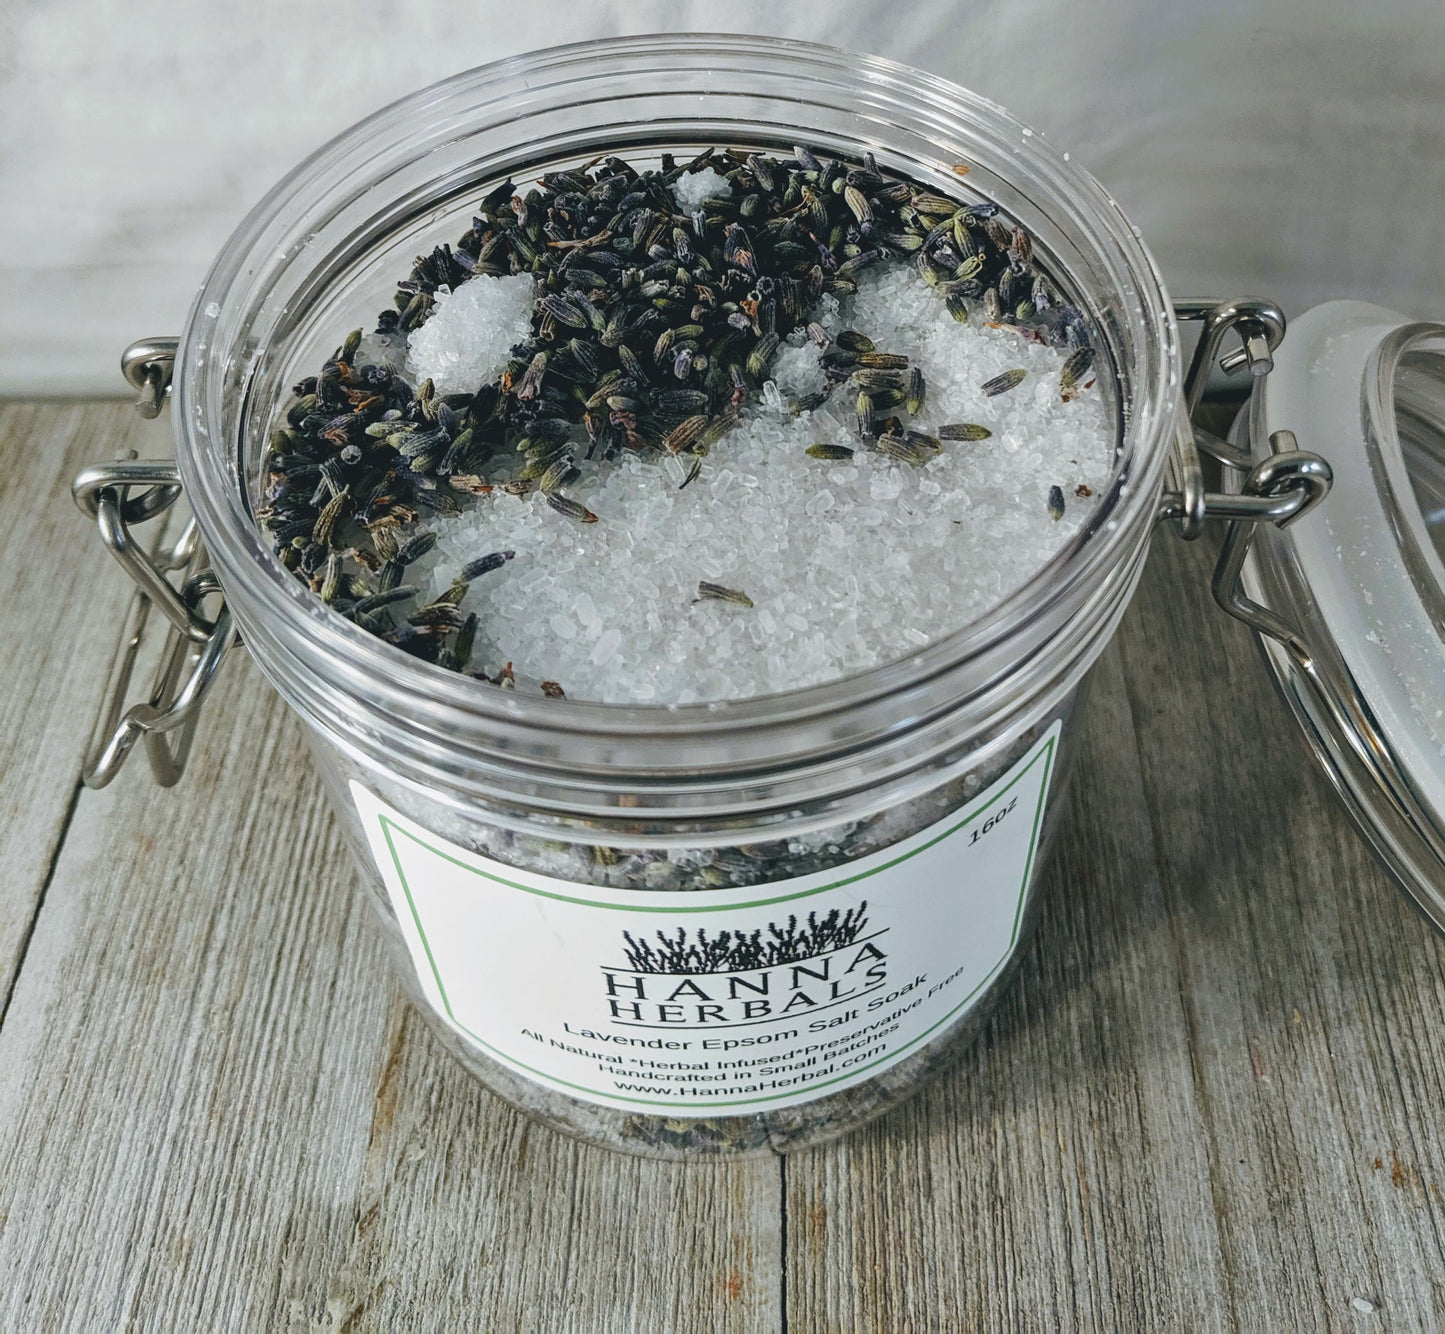 Lavender and Epsom Bath Salts - Hanna Herbals